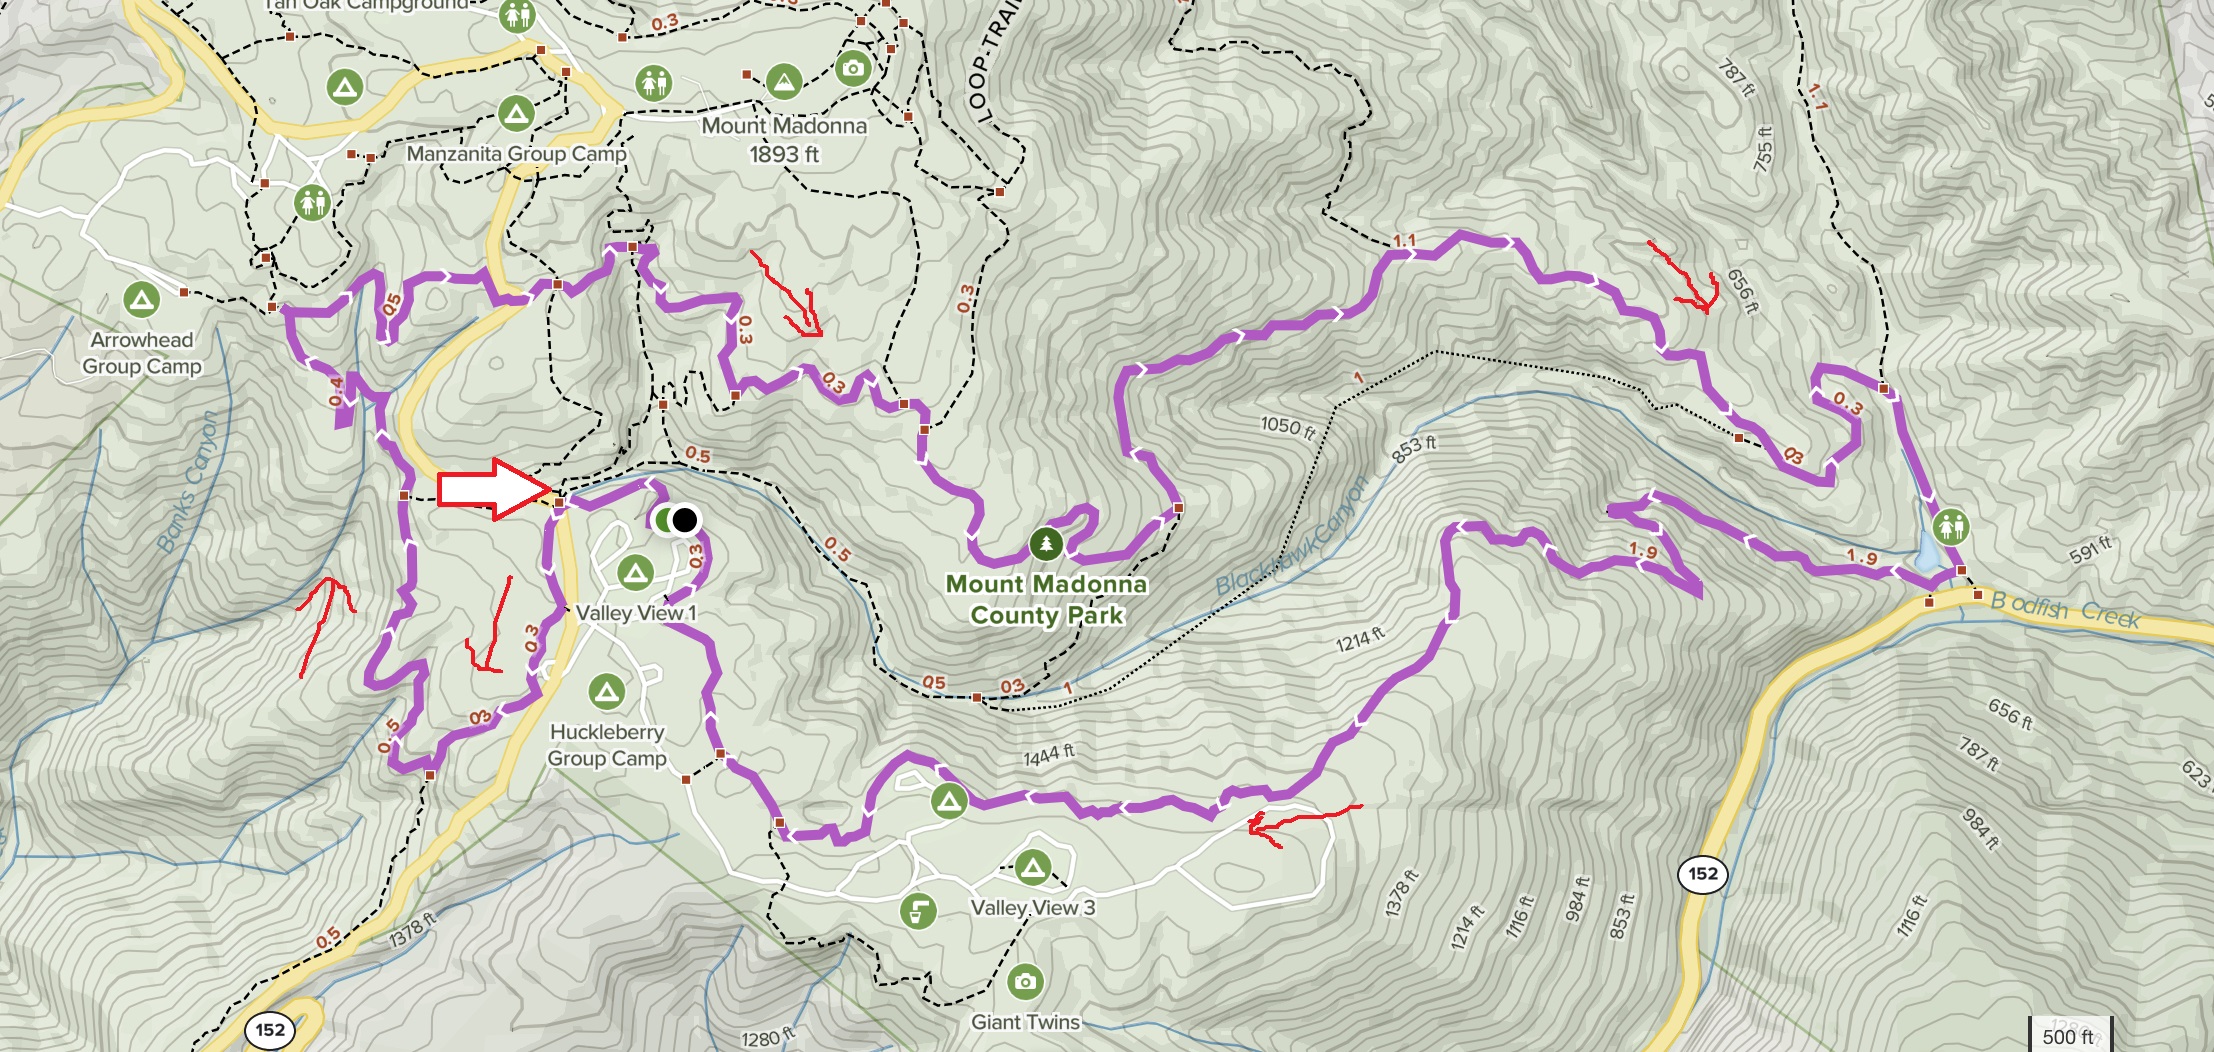 Madona cp trail map.jpg